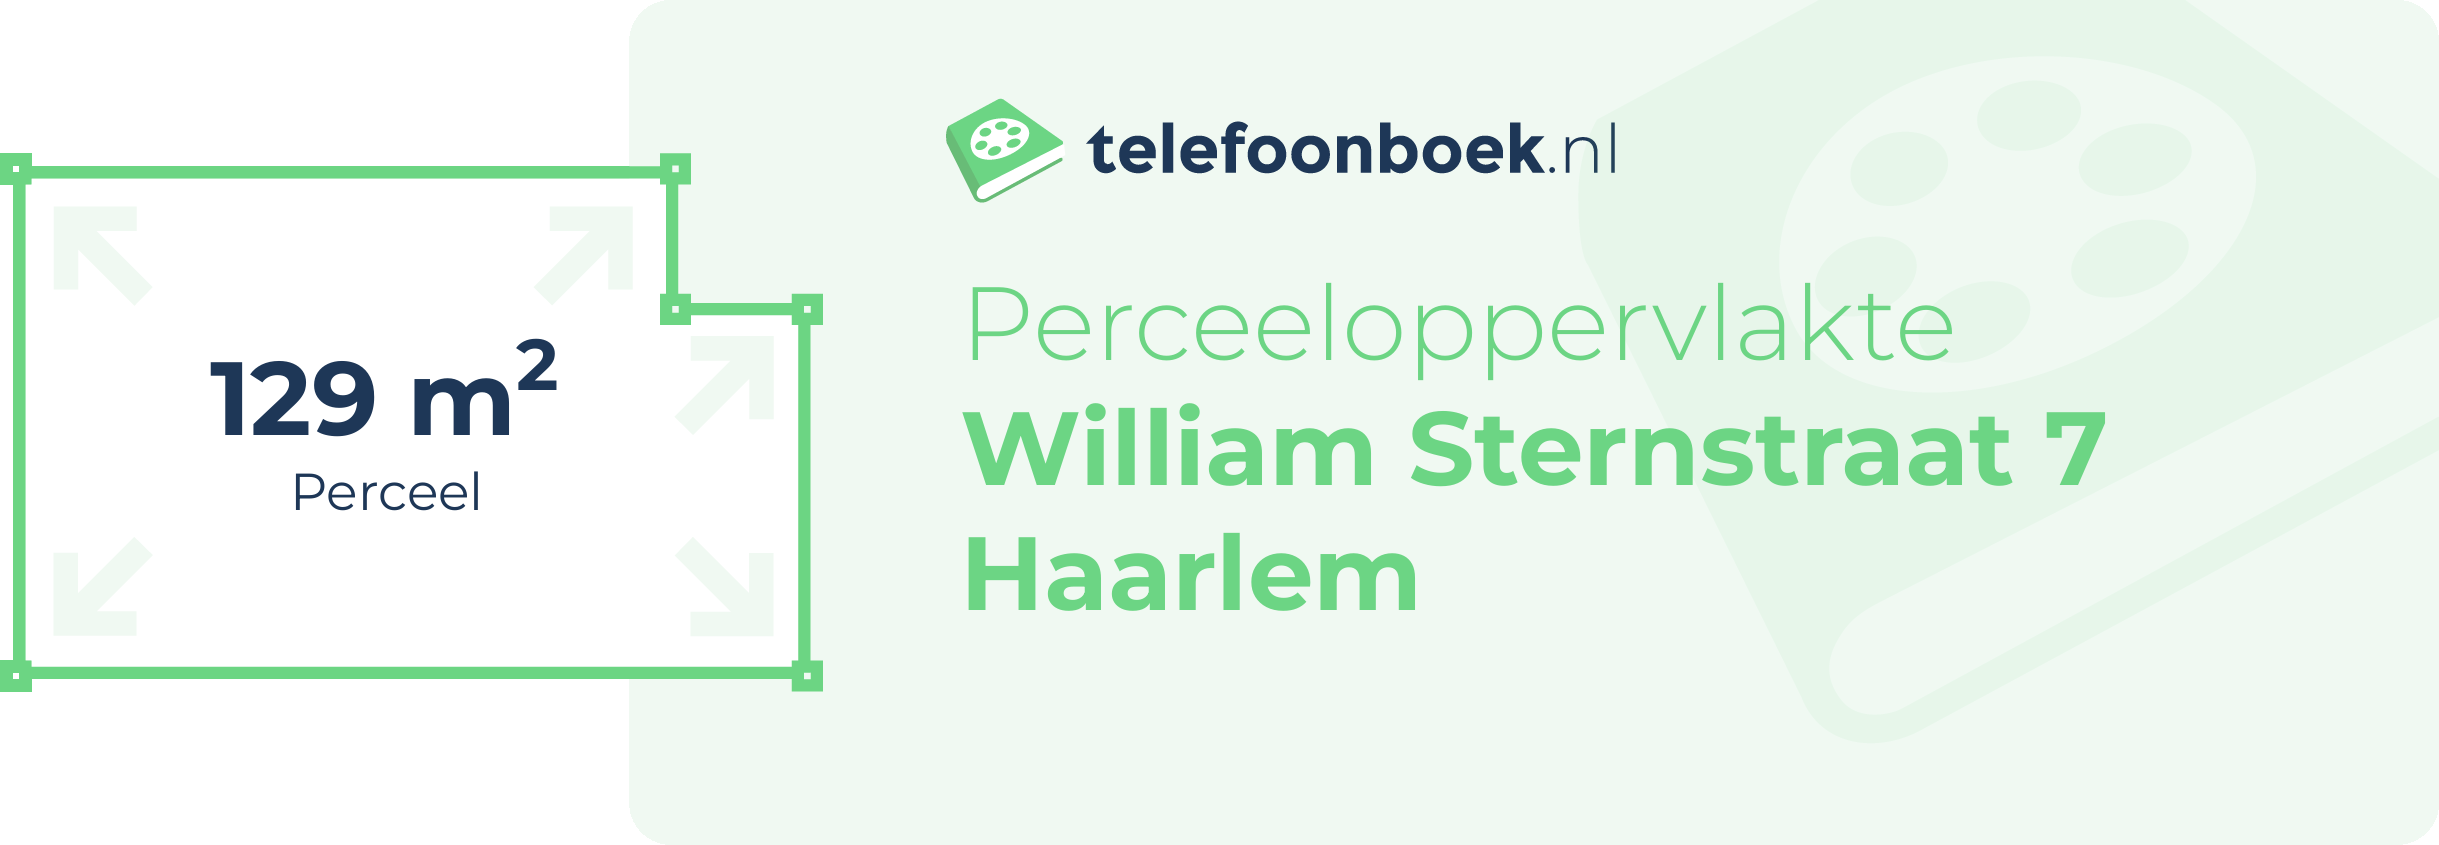 Perceeloppervlakte William Sternstraat 7 Haarlem